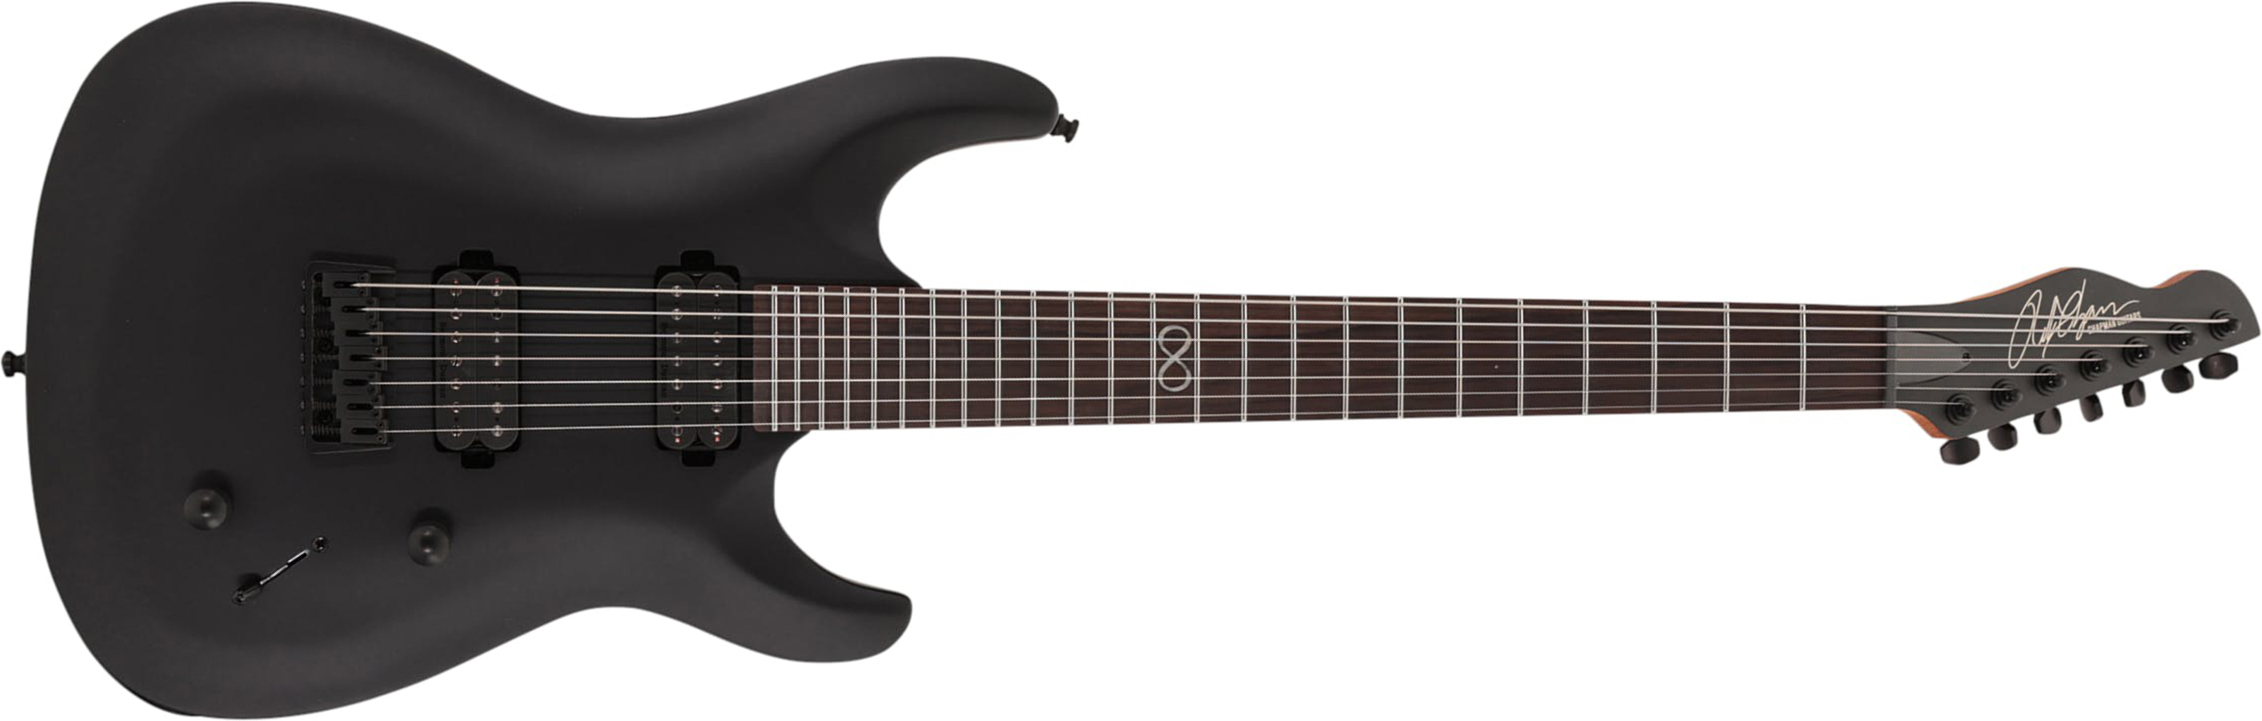 Chapman Guitars Ml1-7 Modern Pro 7c 2h Seymour Duncan  Ht Eb - Cyber Black - 7 string electric guitar - Main picture